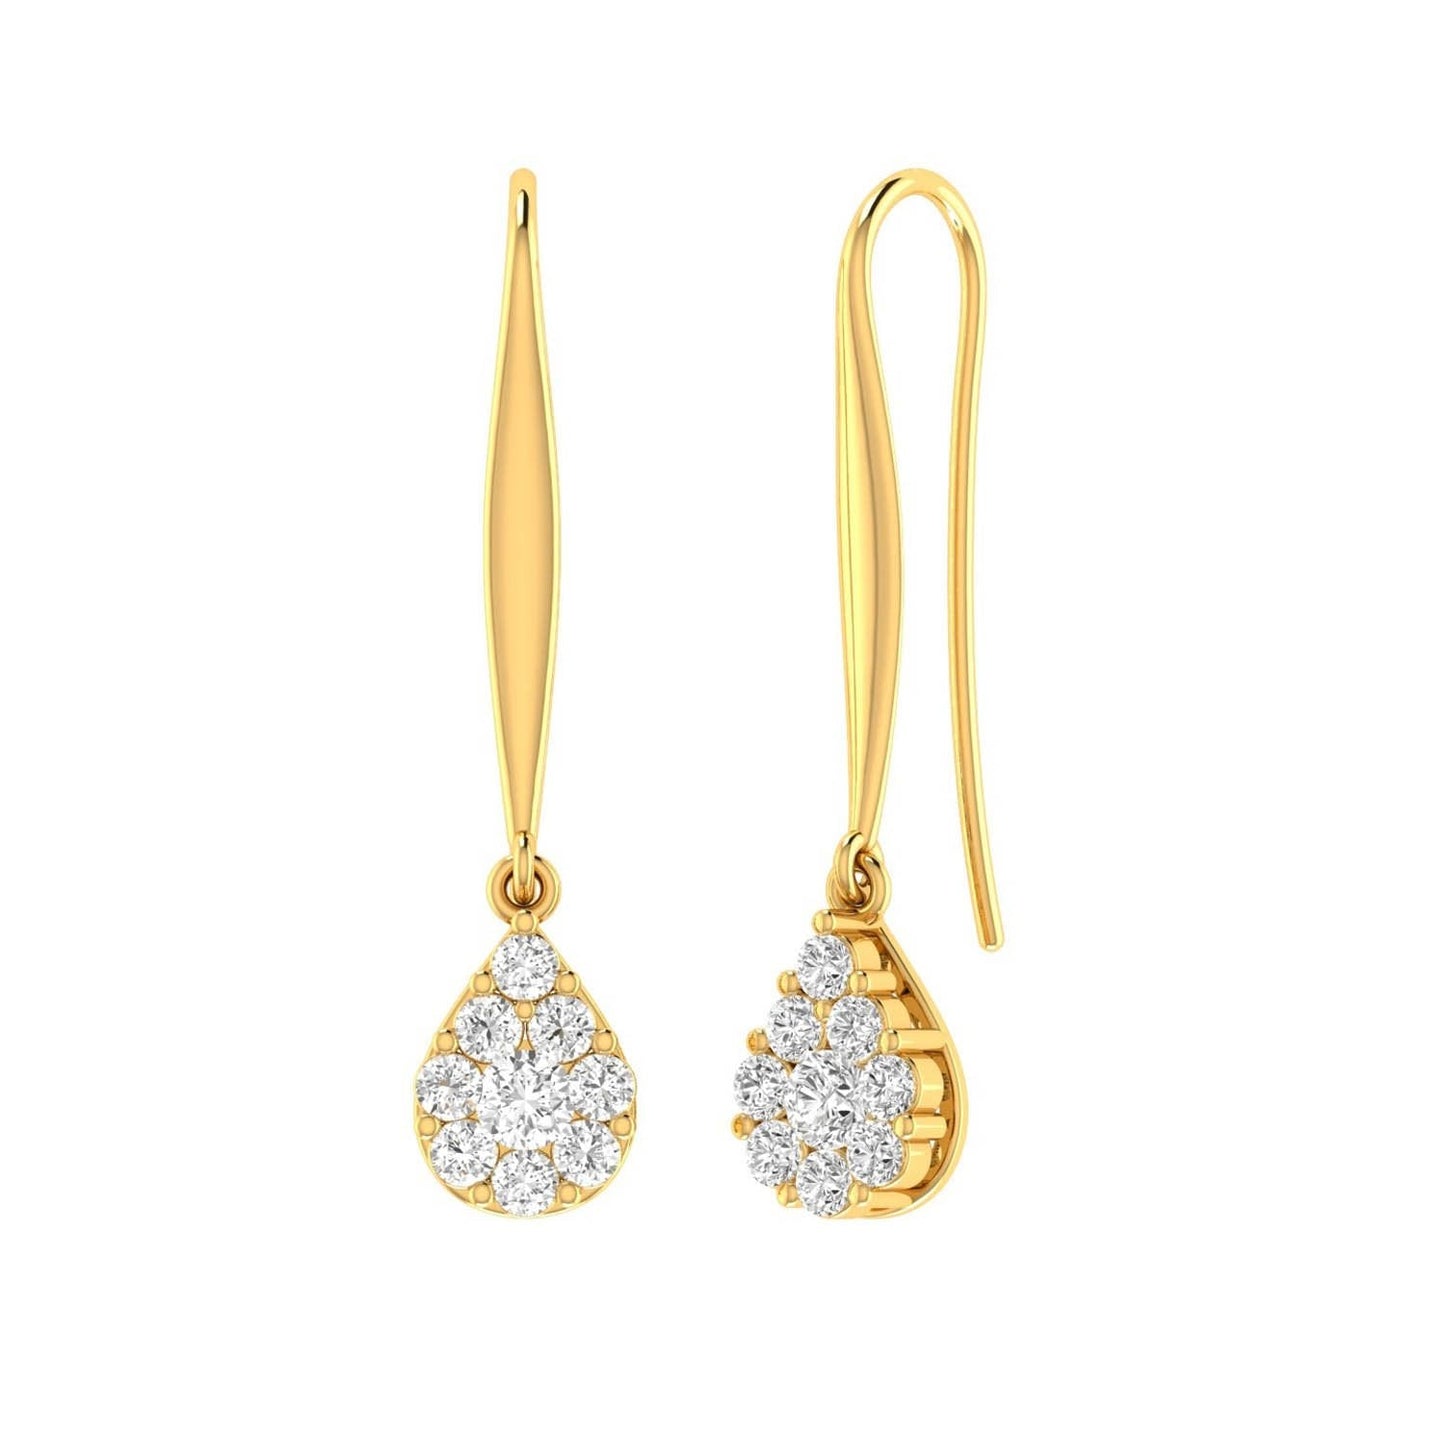 Tear Drop Hook Diamond Earrings with 0.10ct Diamonds in 9K Yellow Gold - 9YTDSH10GH